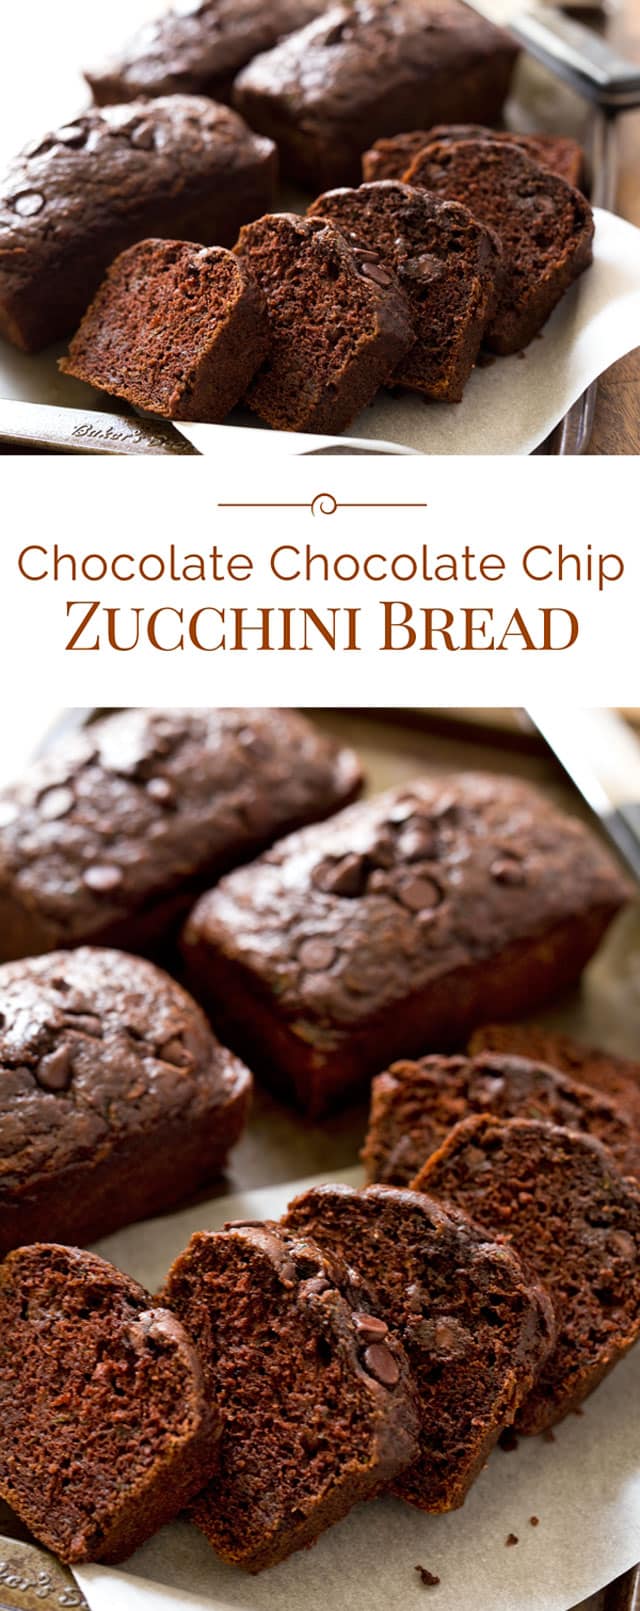 Chocolate-Chocolate-Chip-Zucchini-Bread-Collage-Barbara-Bakes